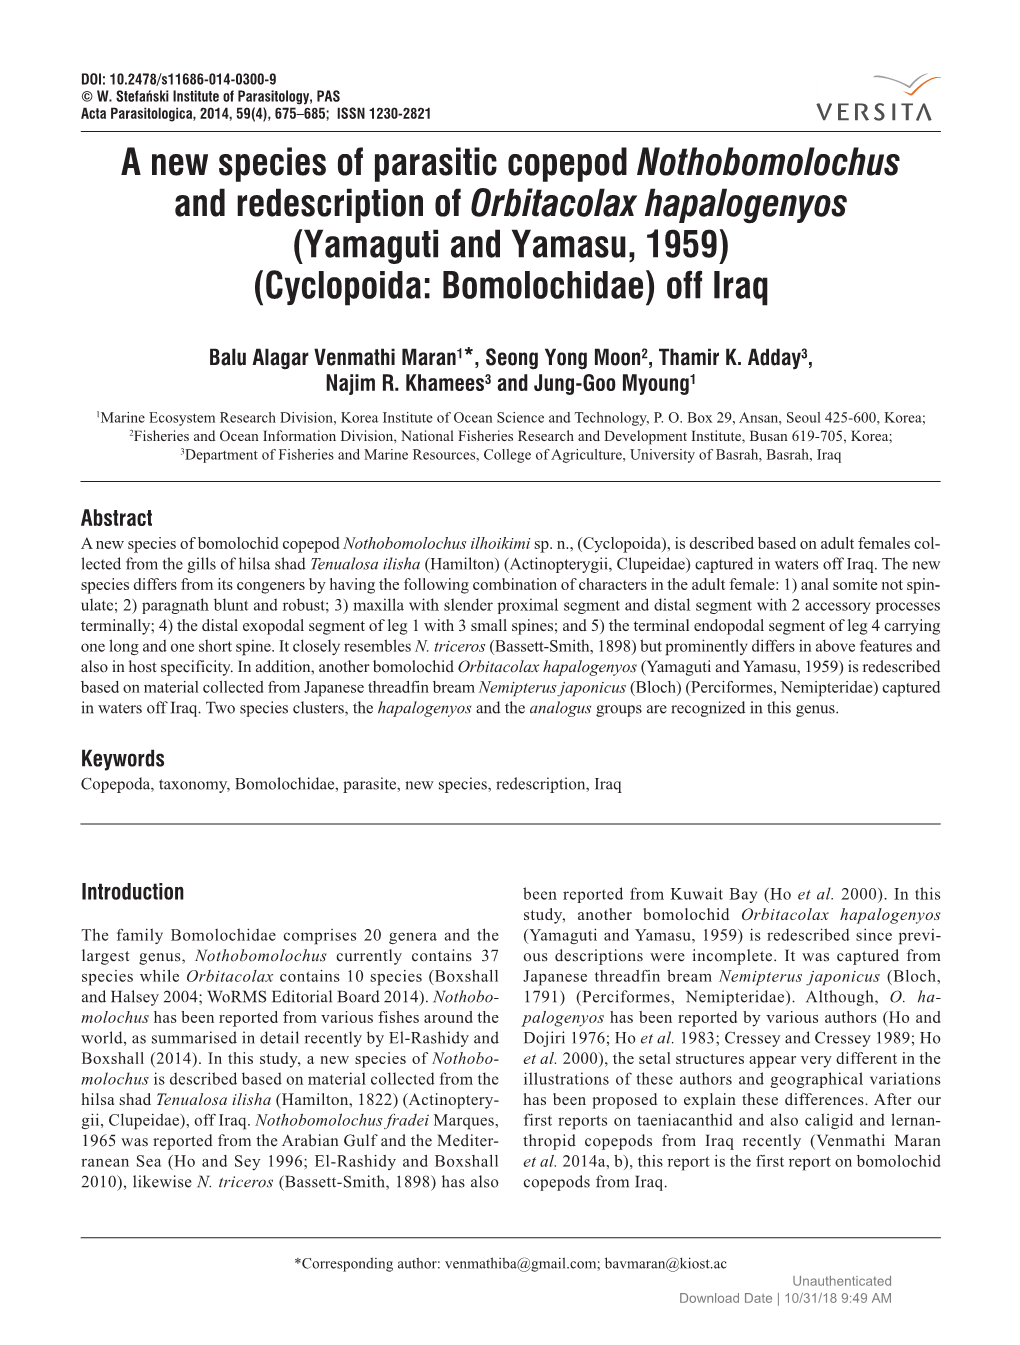 A New Species of Parasitic Copepod Nothobomolochus and Redescription of Orbitacolax Hapalogenyos (Yamaguti and Yamasu, 1959) (Cyclopoida: Bomolochidae) Off Iraq